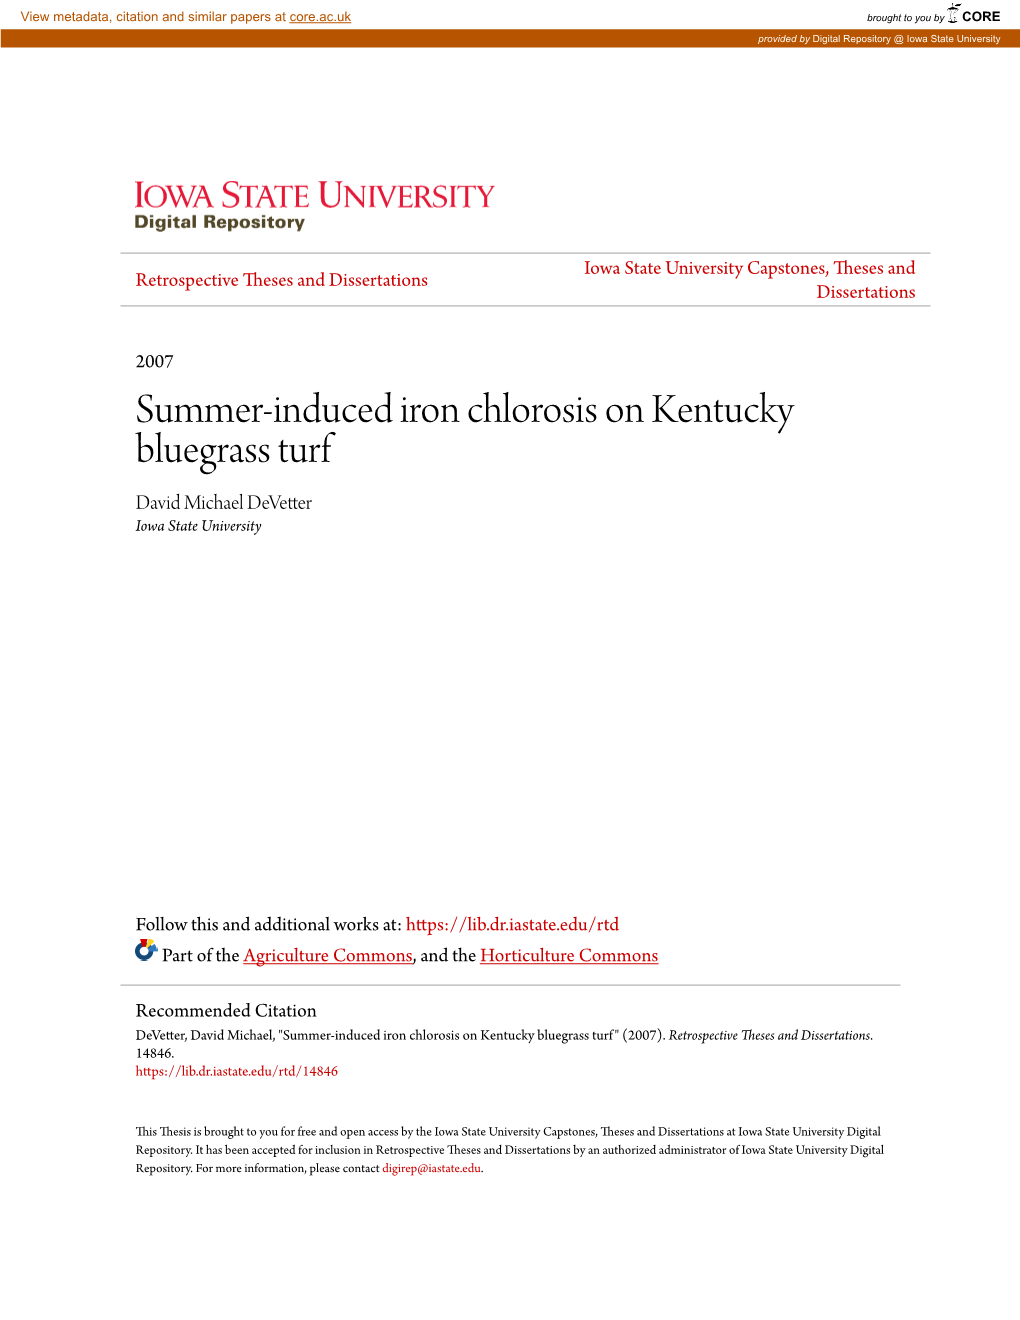 Summer-Induced Iron Chlorosis on Kentucky Bluegrass Turf David Michael Devetter Iowa State University